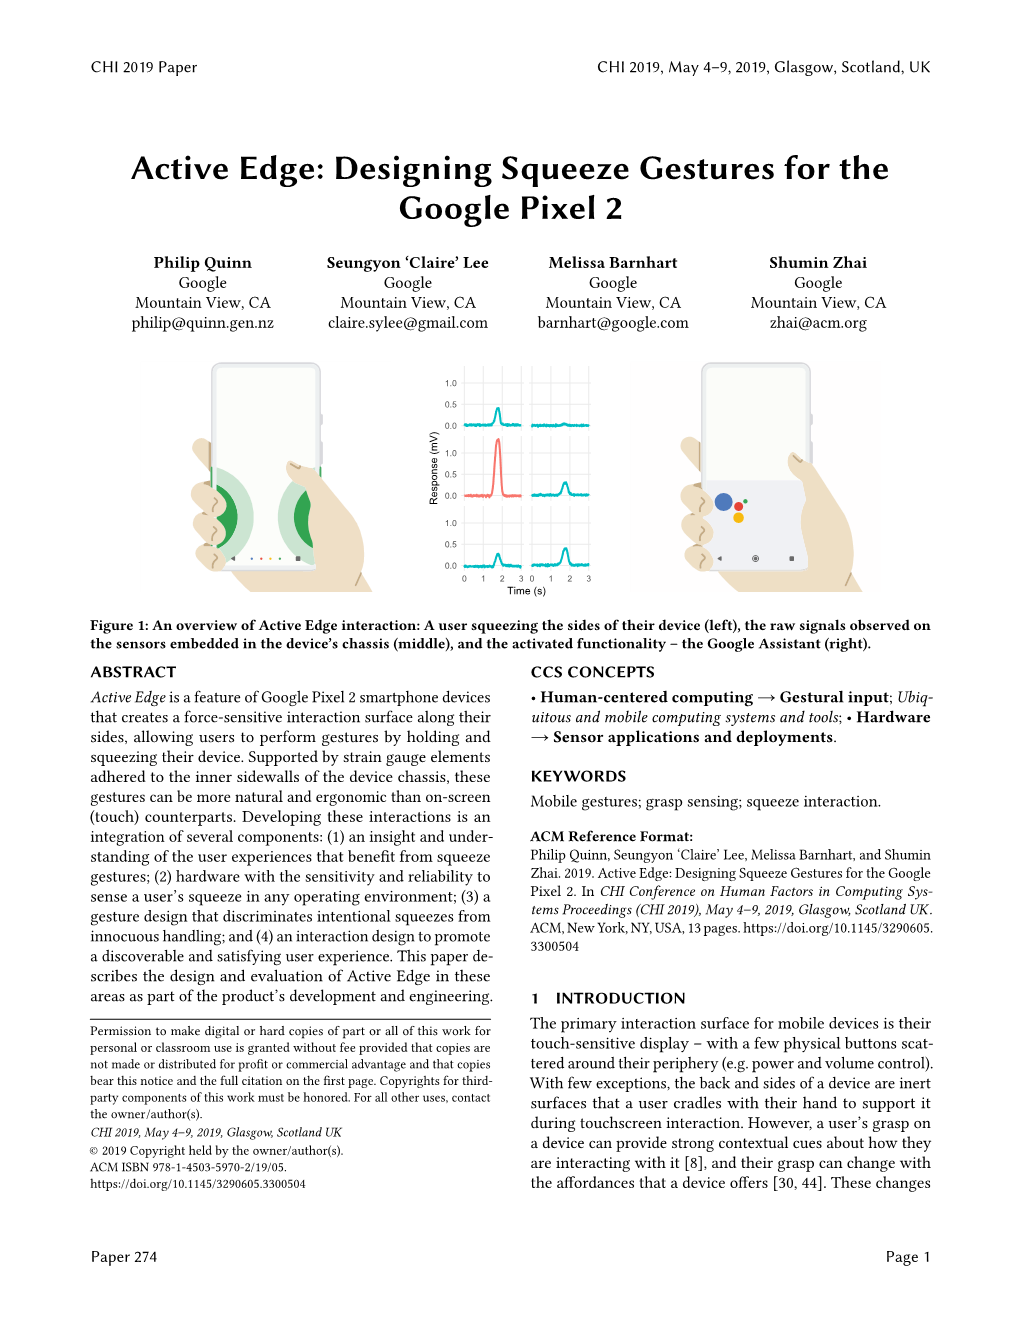 Active Edge: Designing Squeeze Gestures for the Google Pixel 2